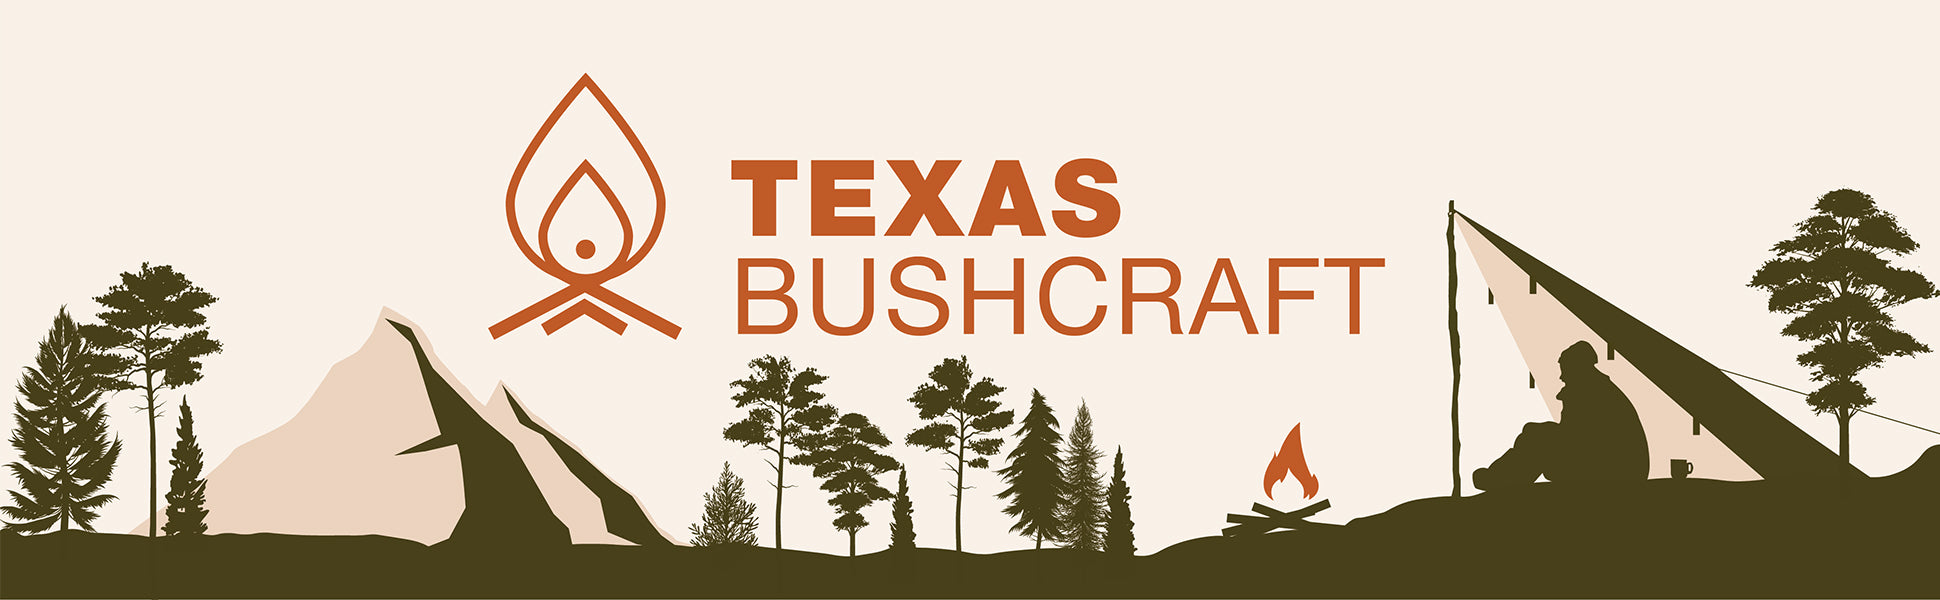 Texas Bushcraft Survival Tarp